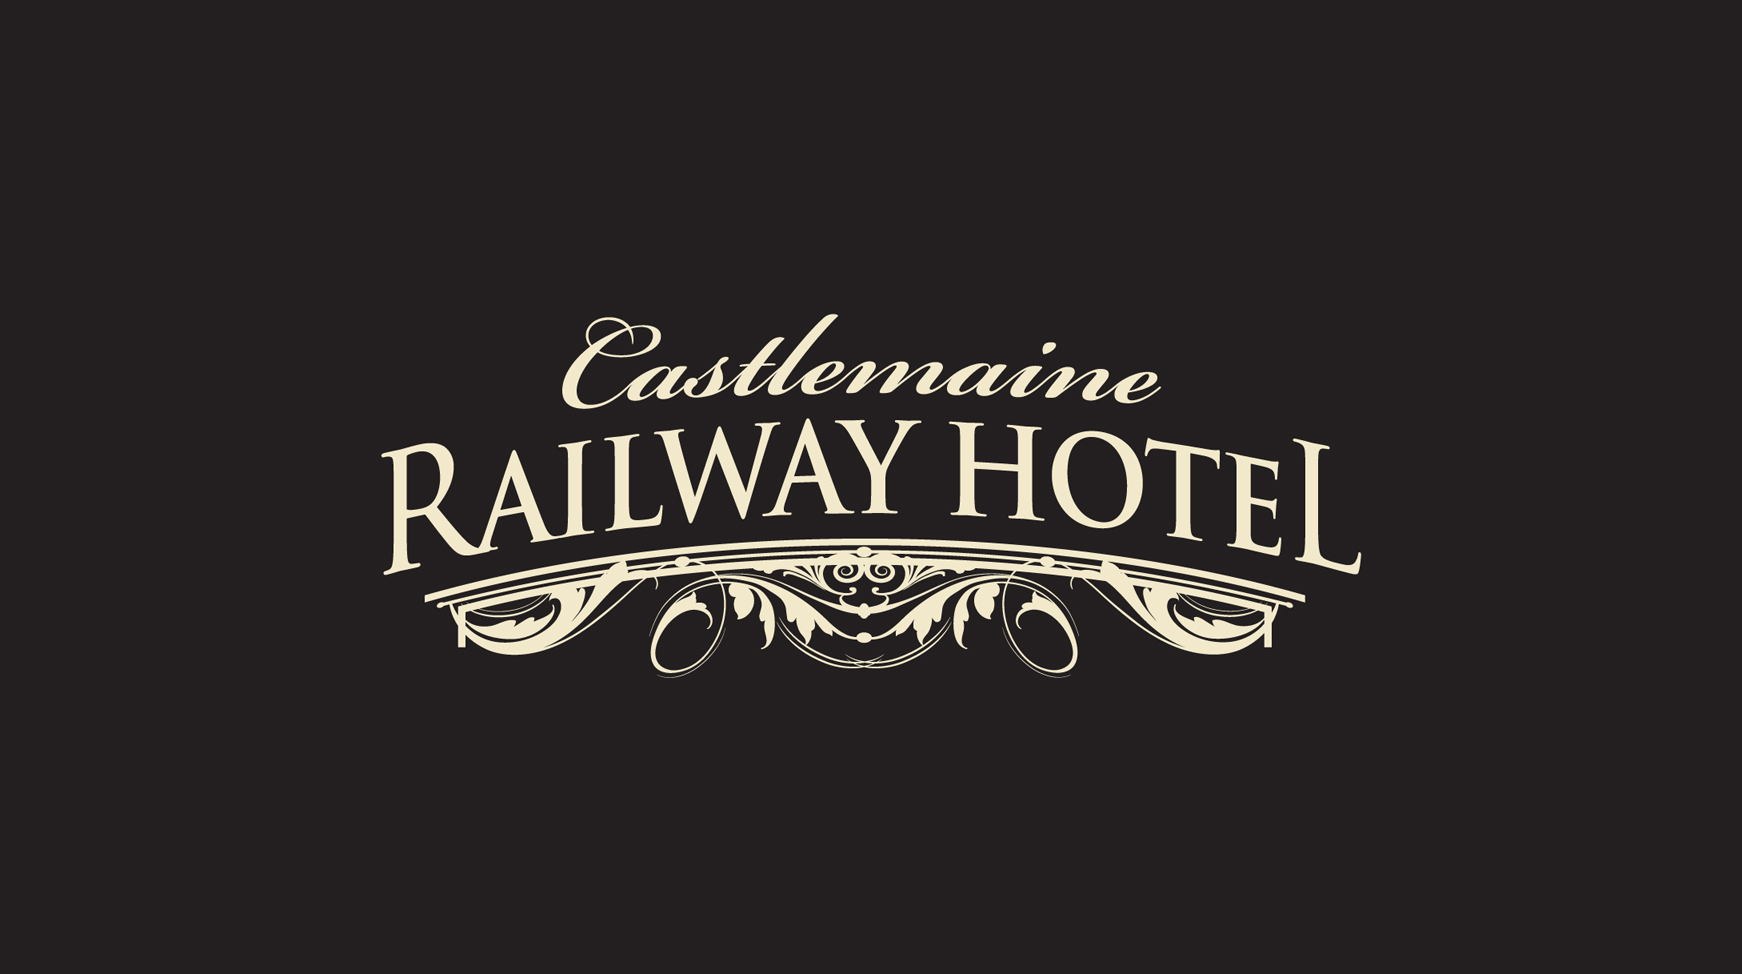 Railway Hotel Castlemaine - Accommodation Mount Tamborine